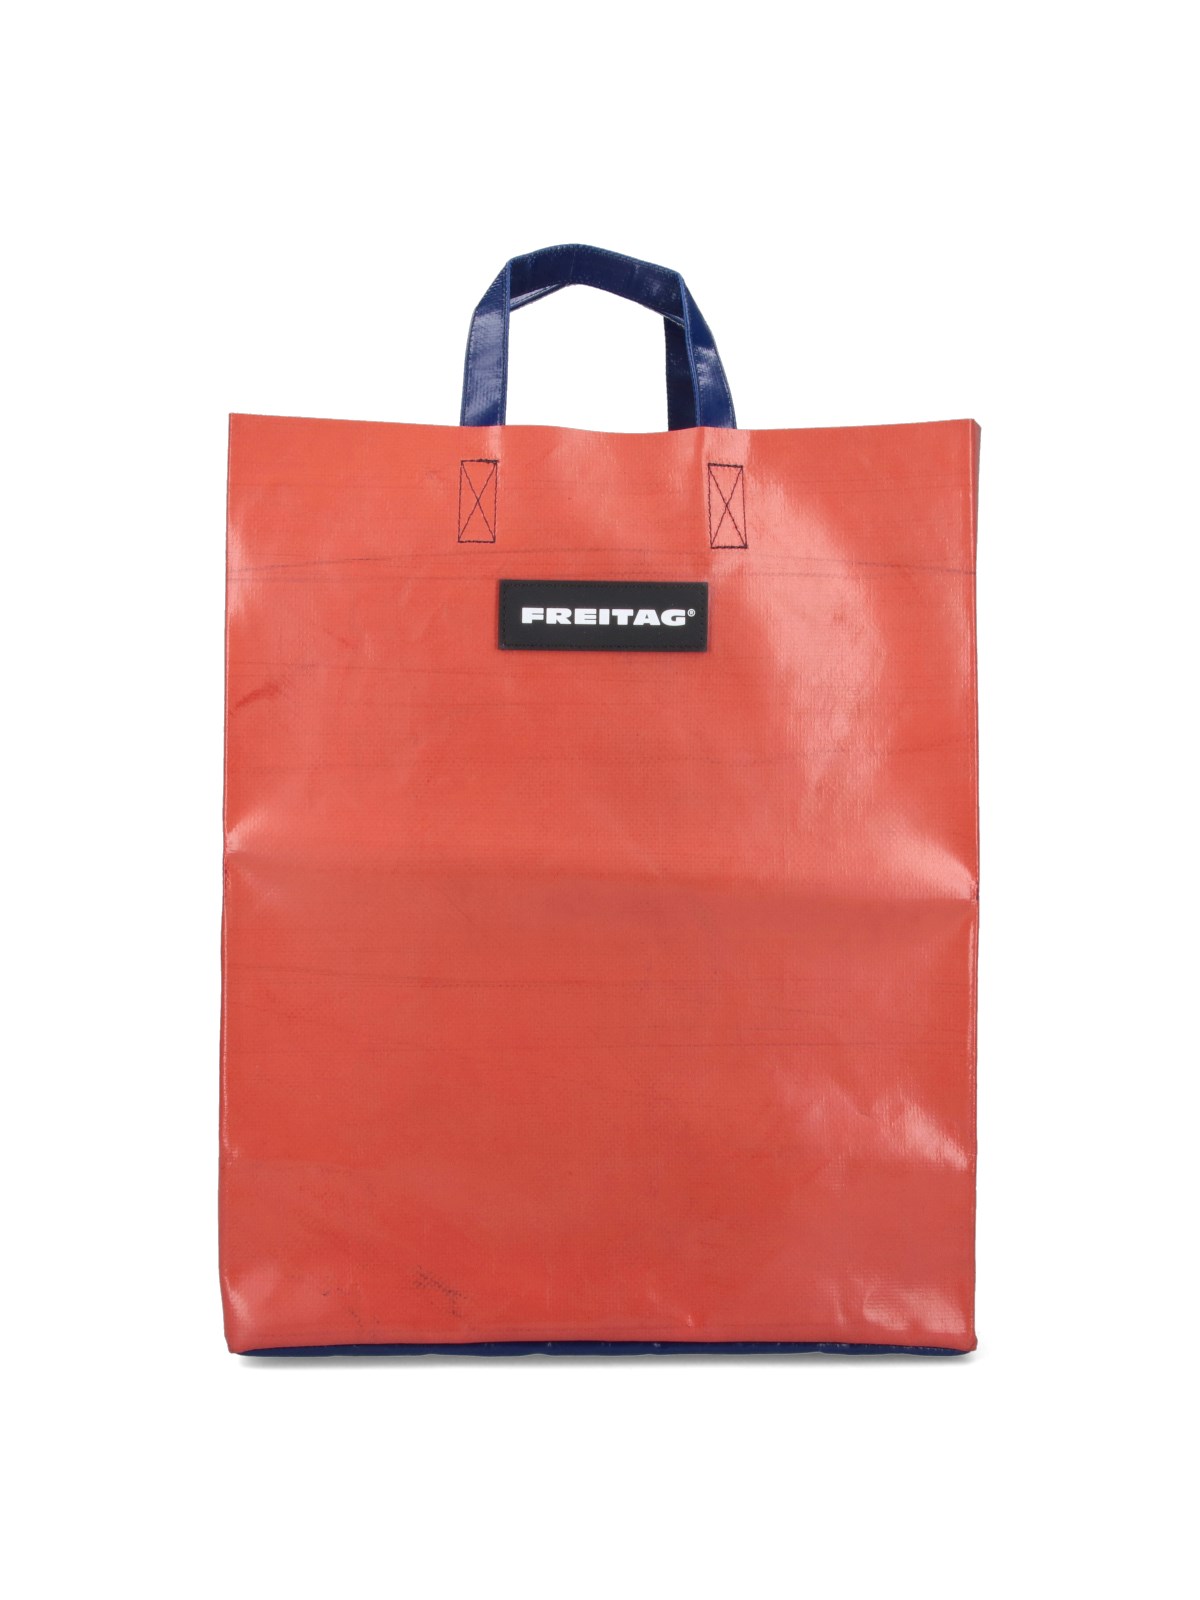 Freitag 'f52 miami vice' tote bag available on SUGAR - 147032